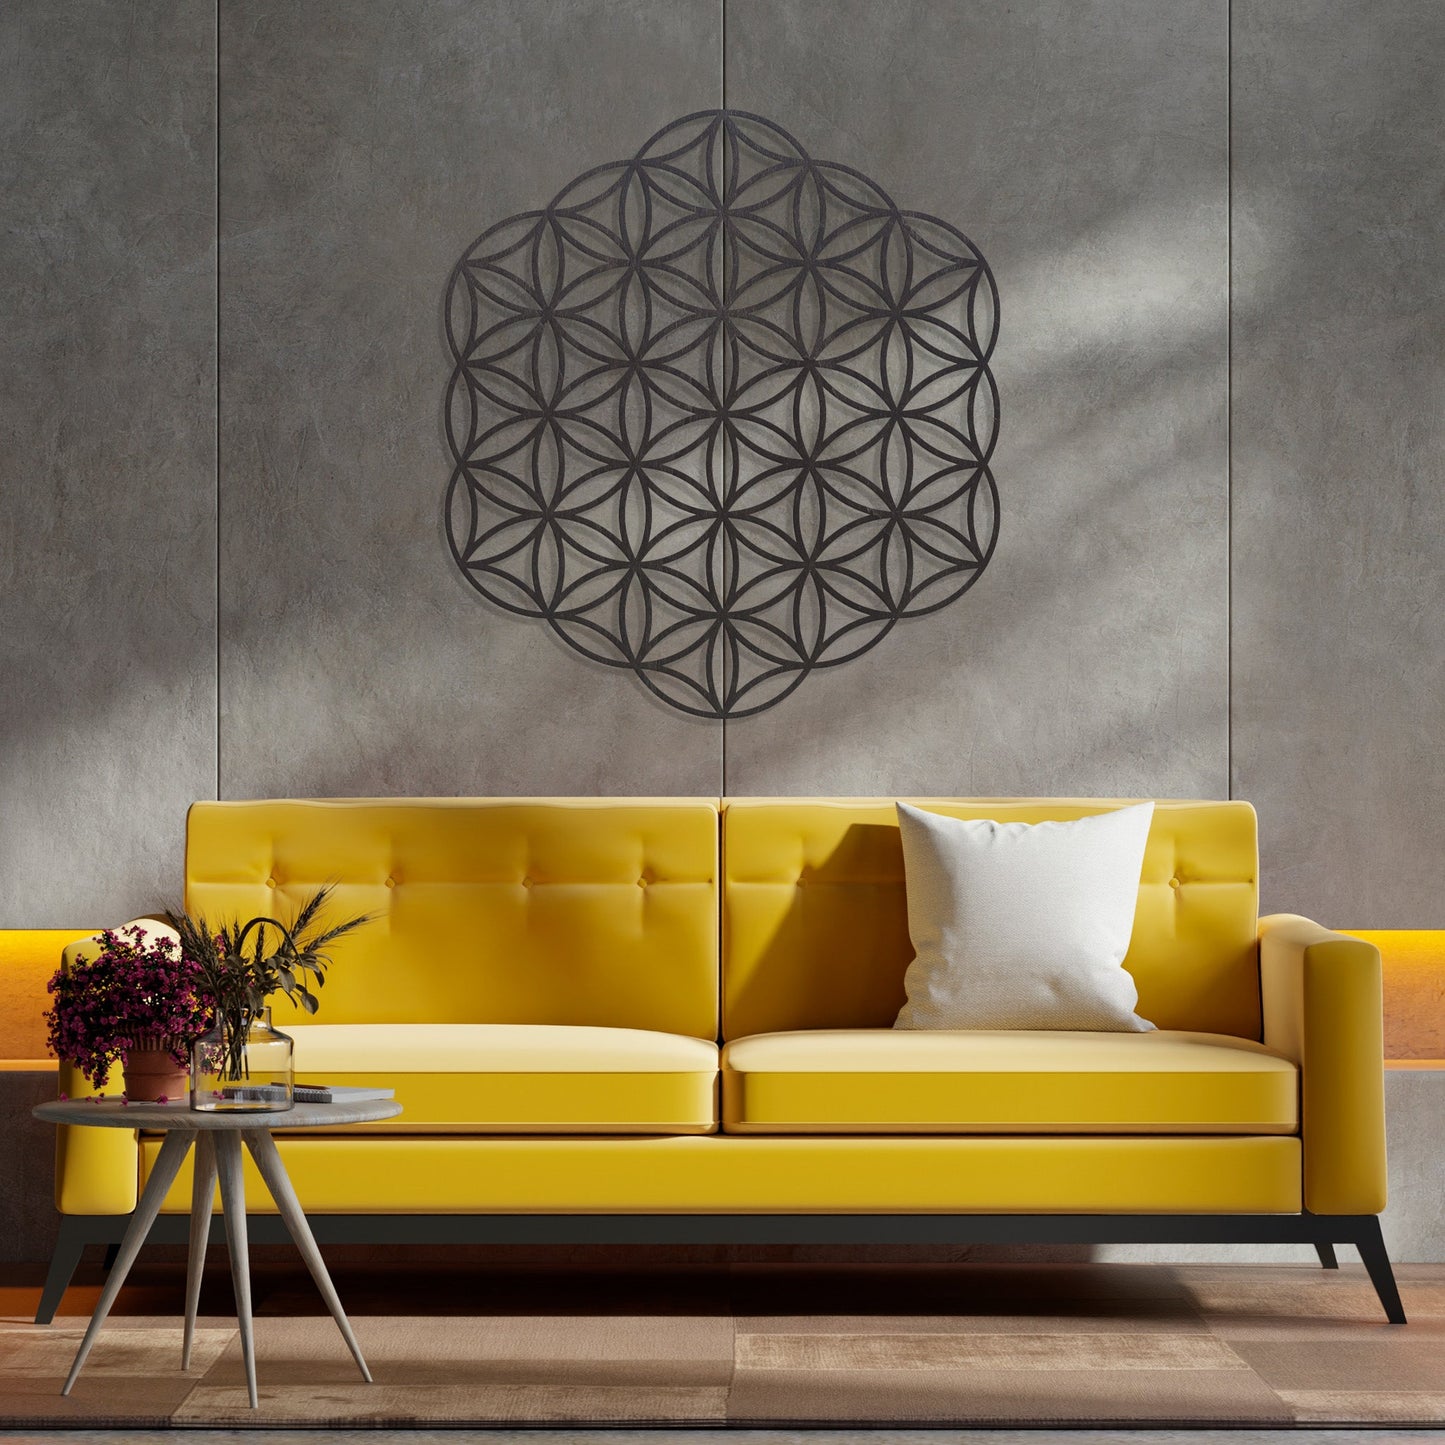 Wandbild Holz "Blume des Lebens" ohne Rand - Nanino Design Onlineshop -